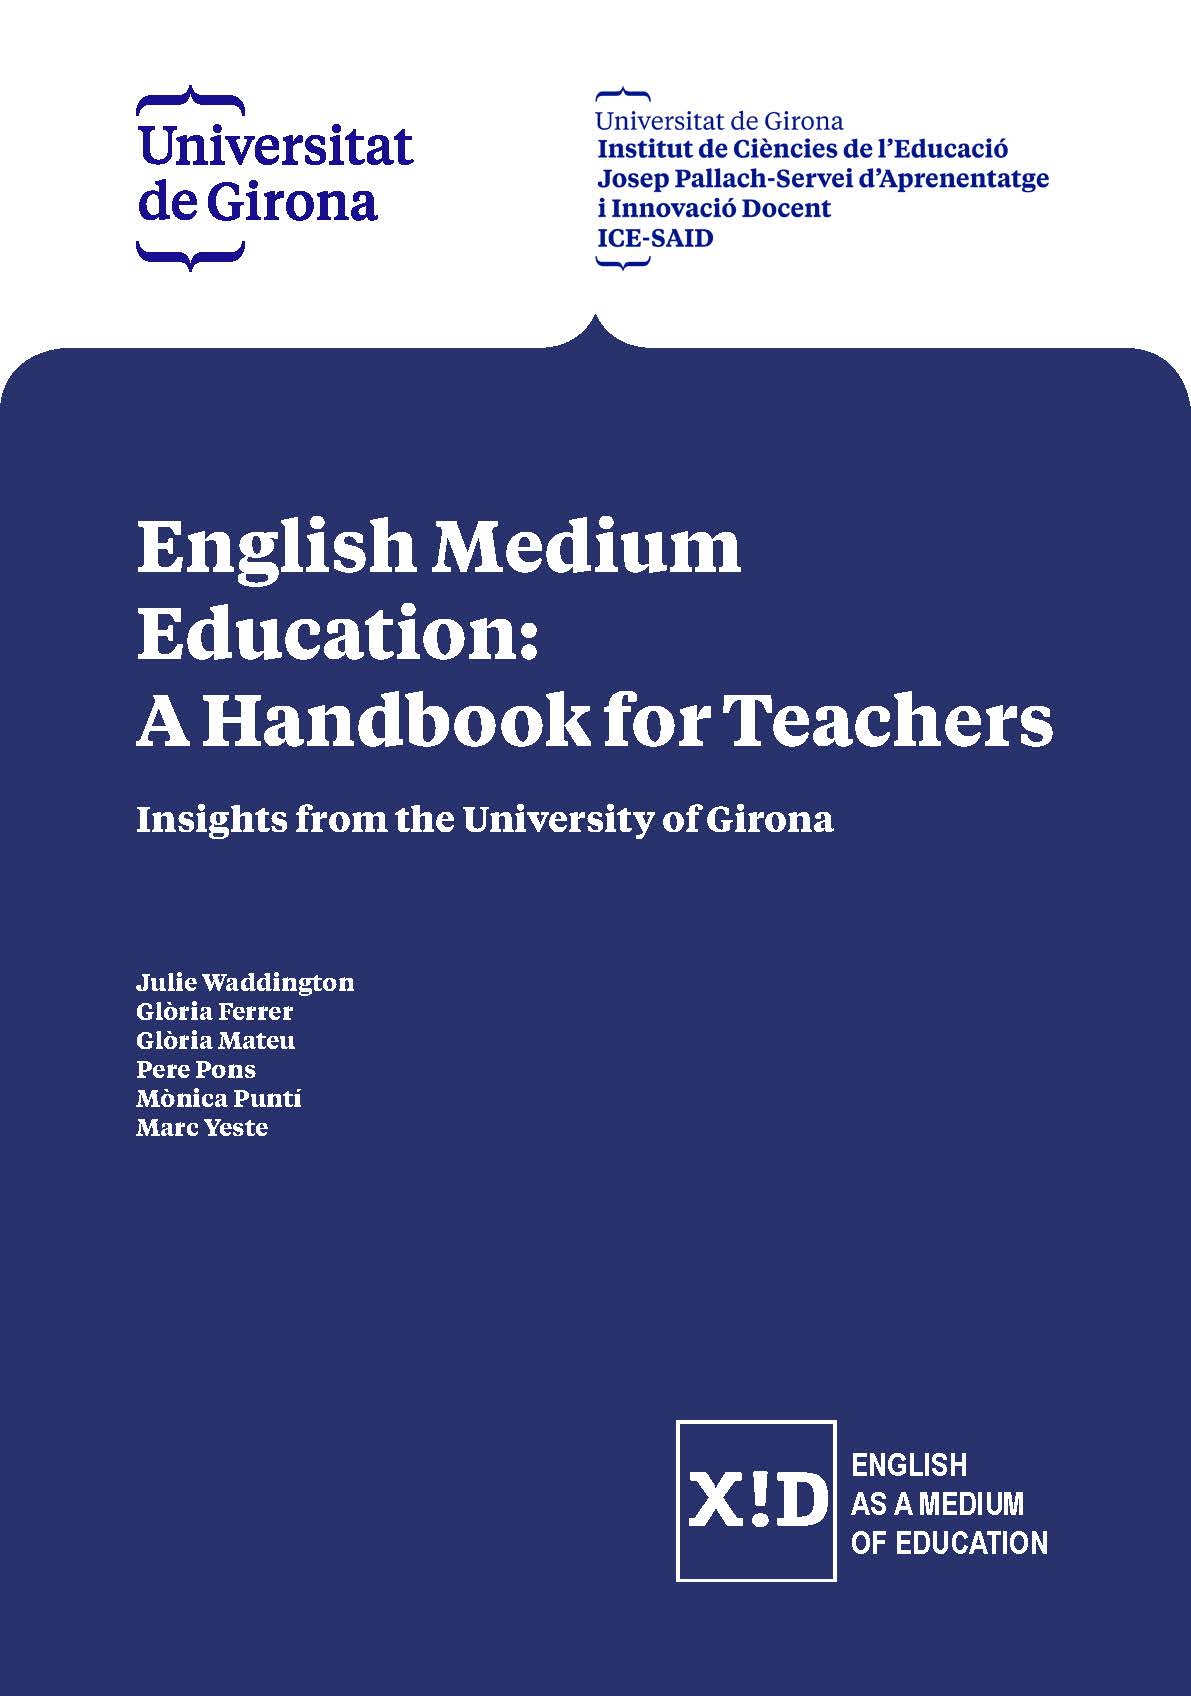 English Medium Education: A Handbook for Teachers